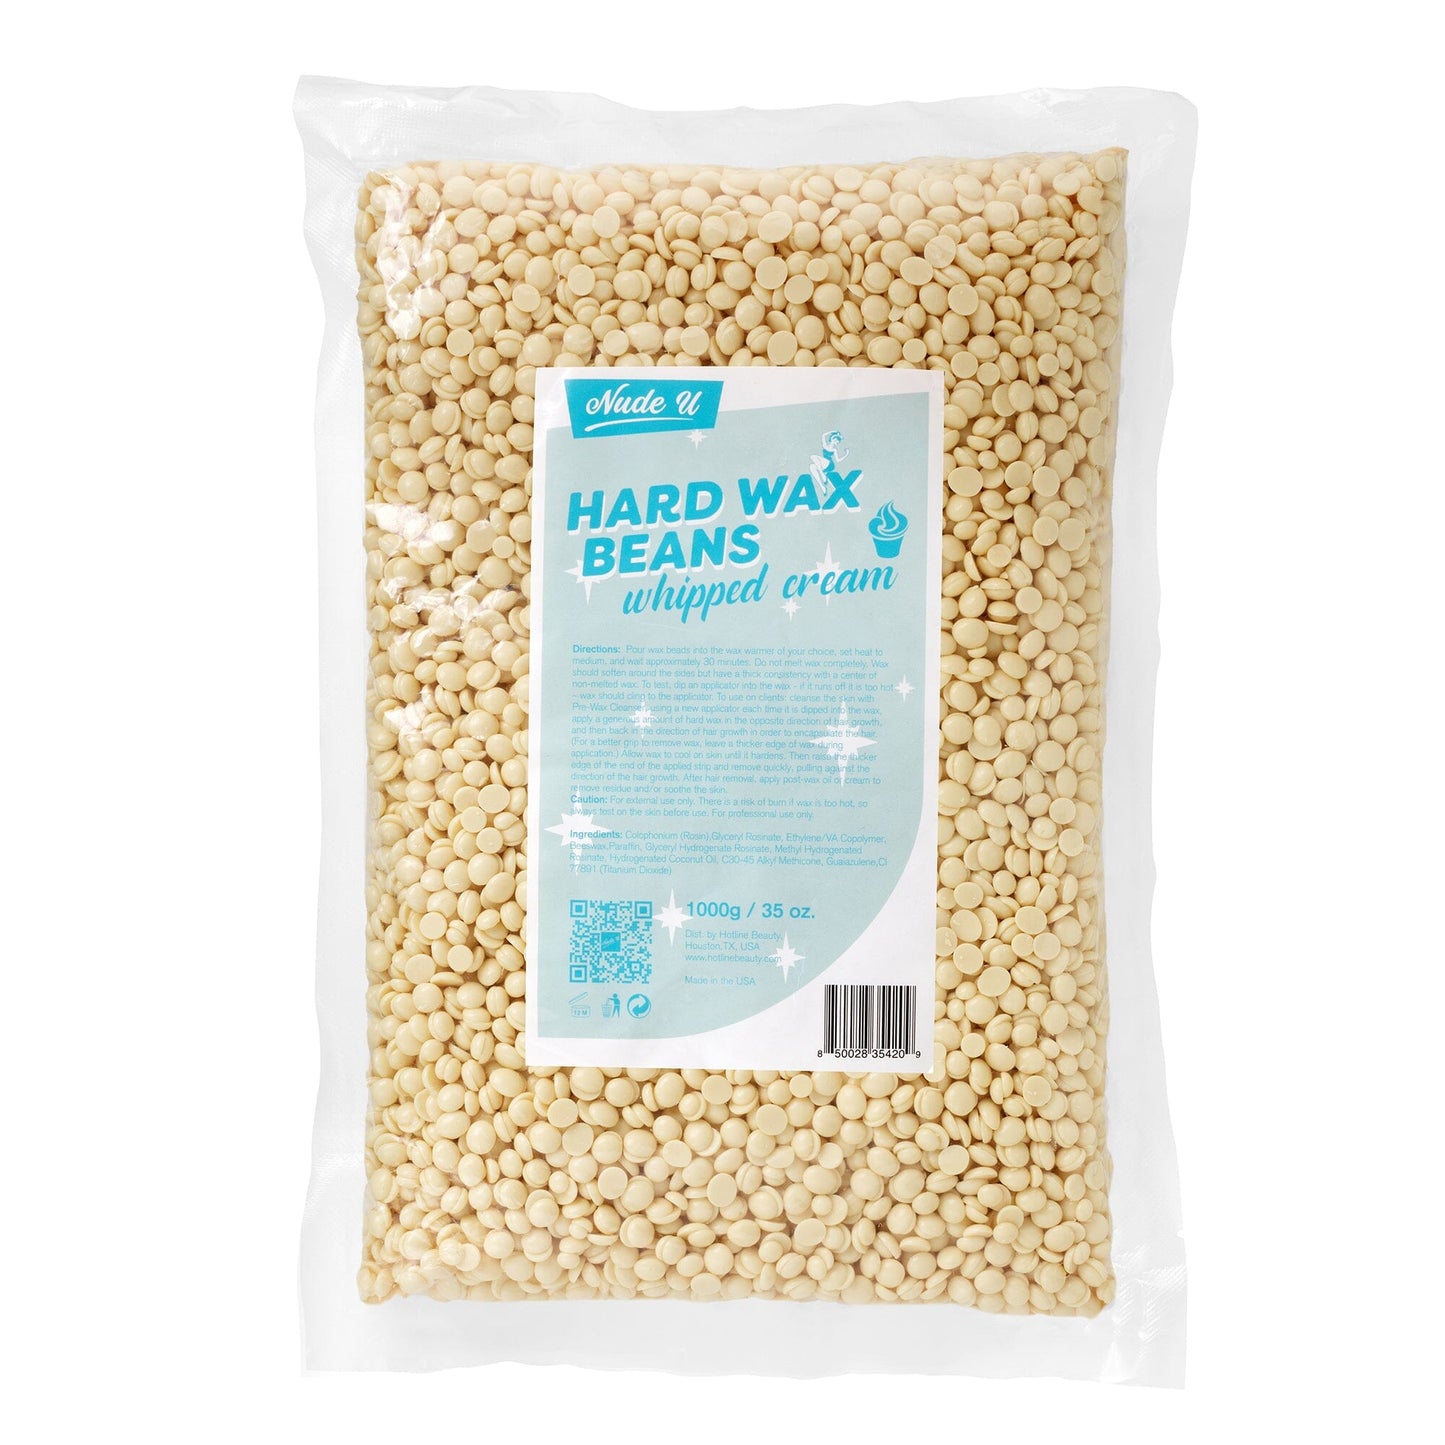 Hard Wax Beans | Whipped Cream | NUDE U Waxing Kits & Supplies NUDE U 35oz / 1000g 